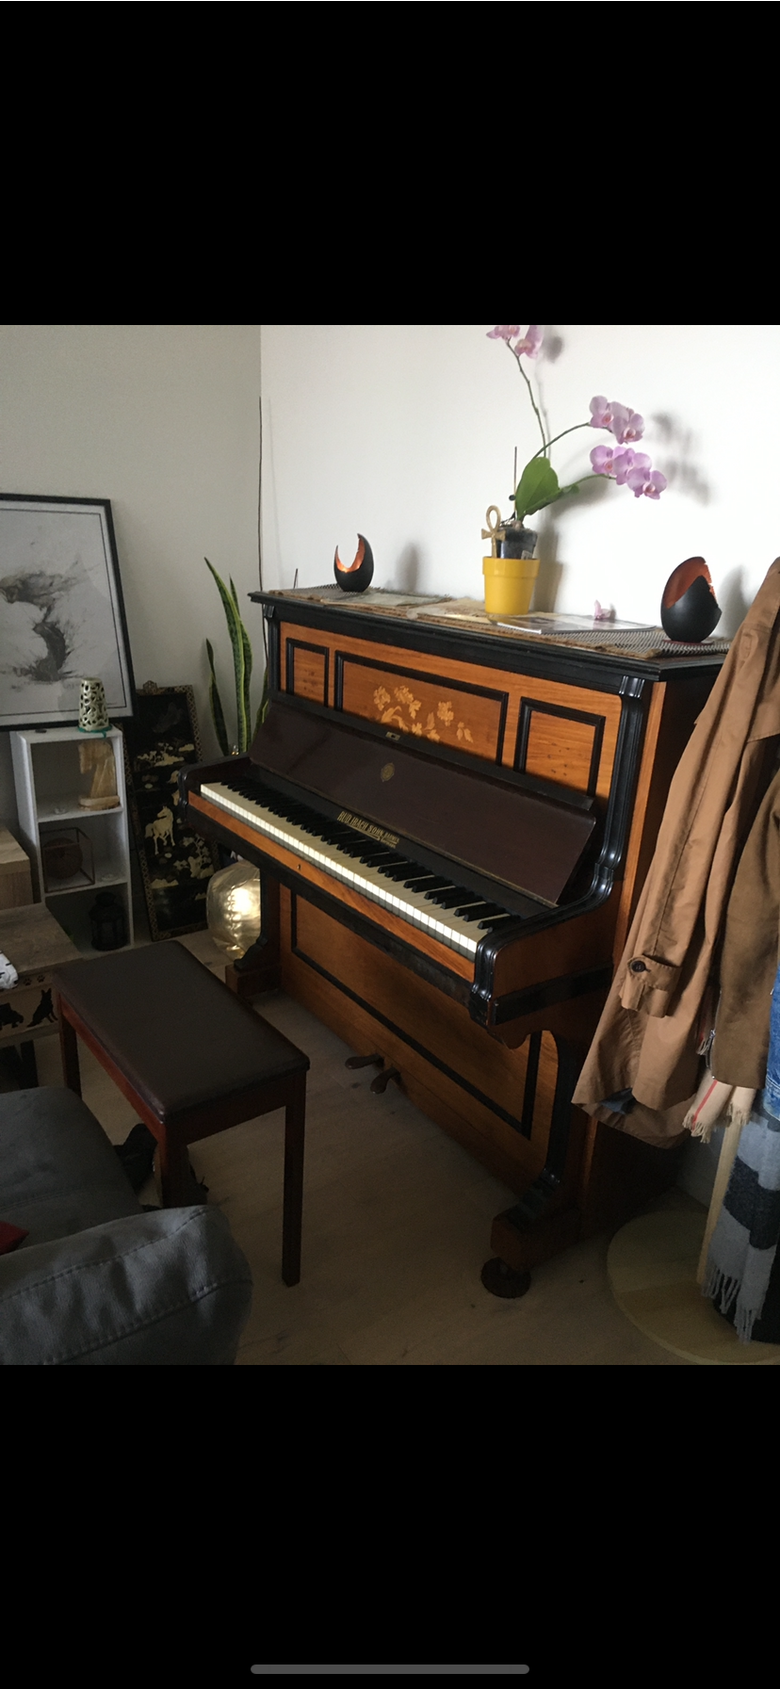 Original 1901 Rud Ibach and Sohn Antique Upright Piano